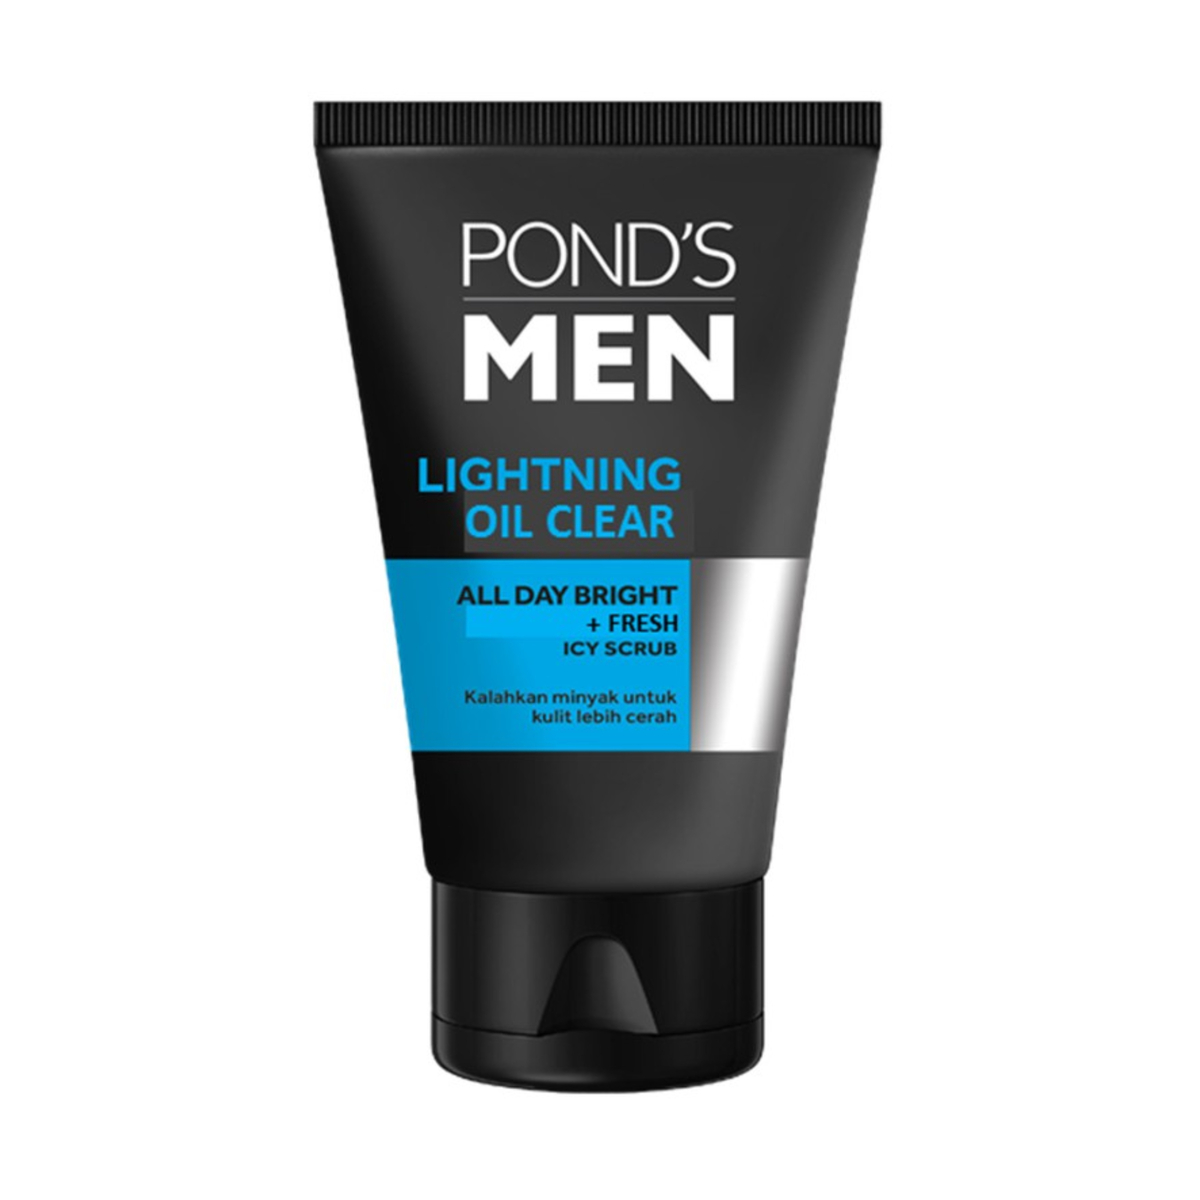 Ponds Men Facial Foam Light Oil Clear 100g